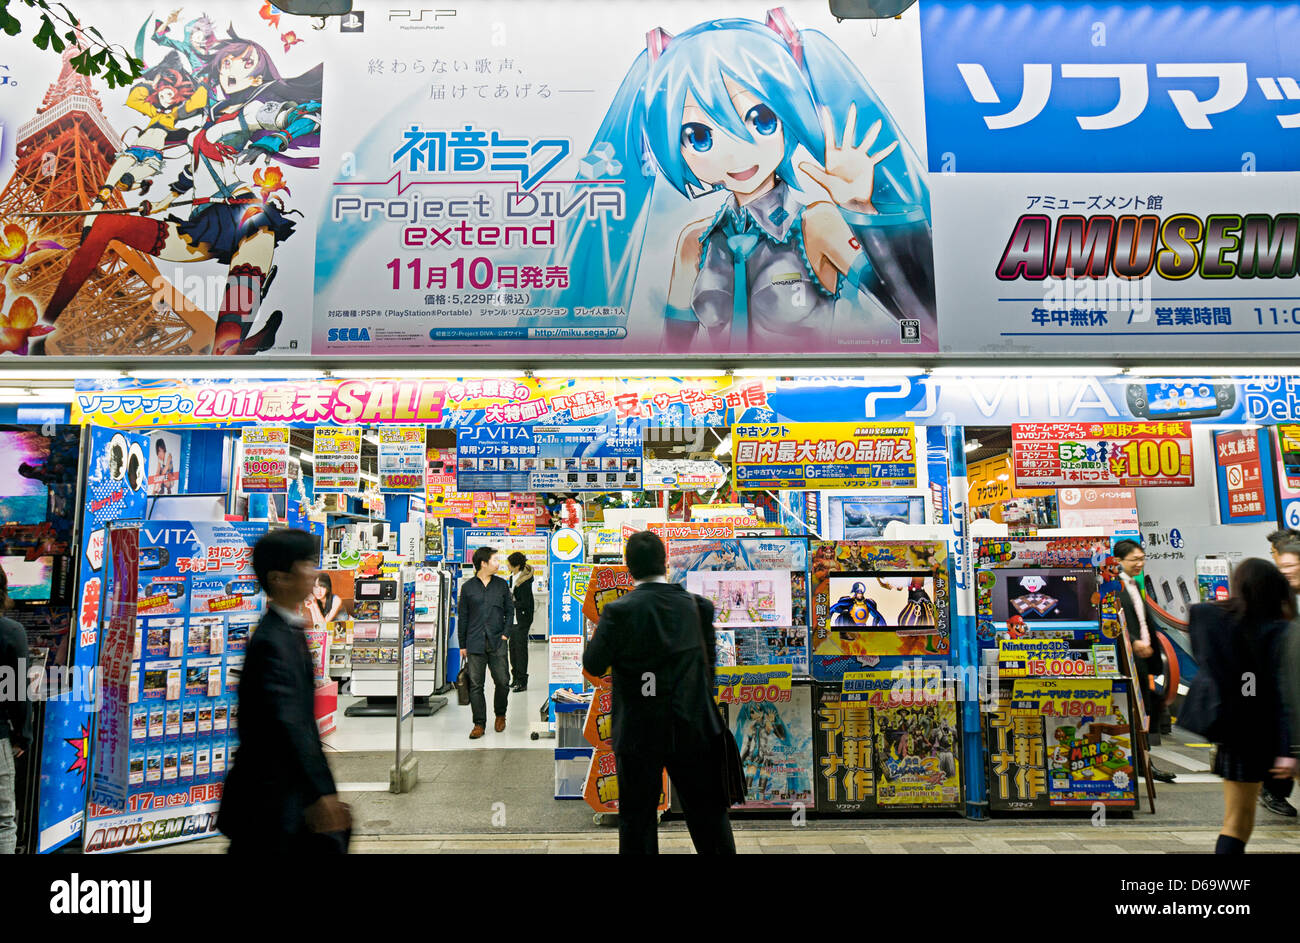 Akihabara District, 'Electric Town', Chuo Dori Street, Tokyo, Japan. Stock Photo